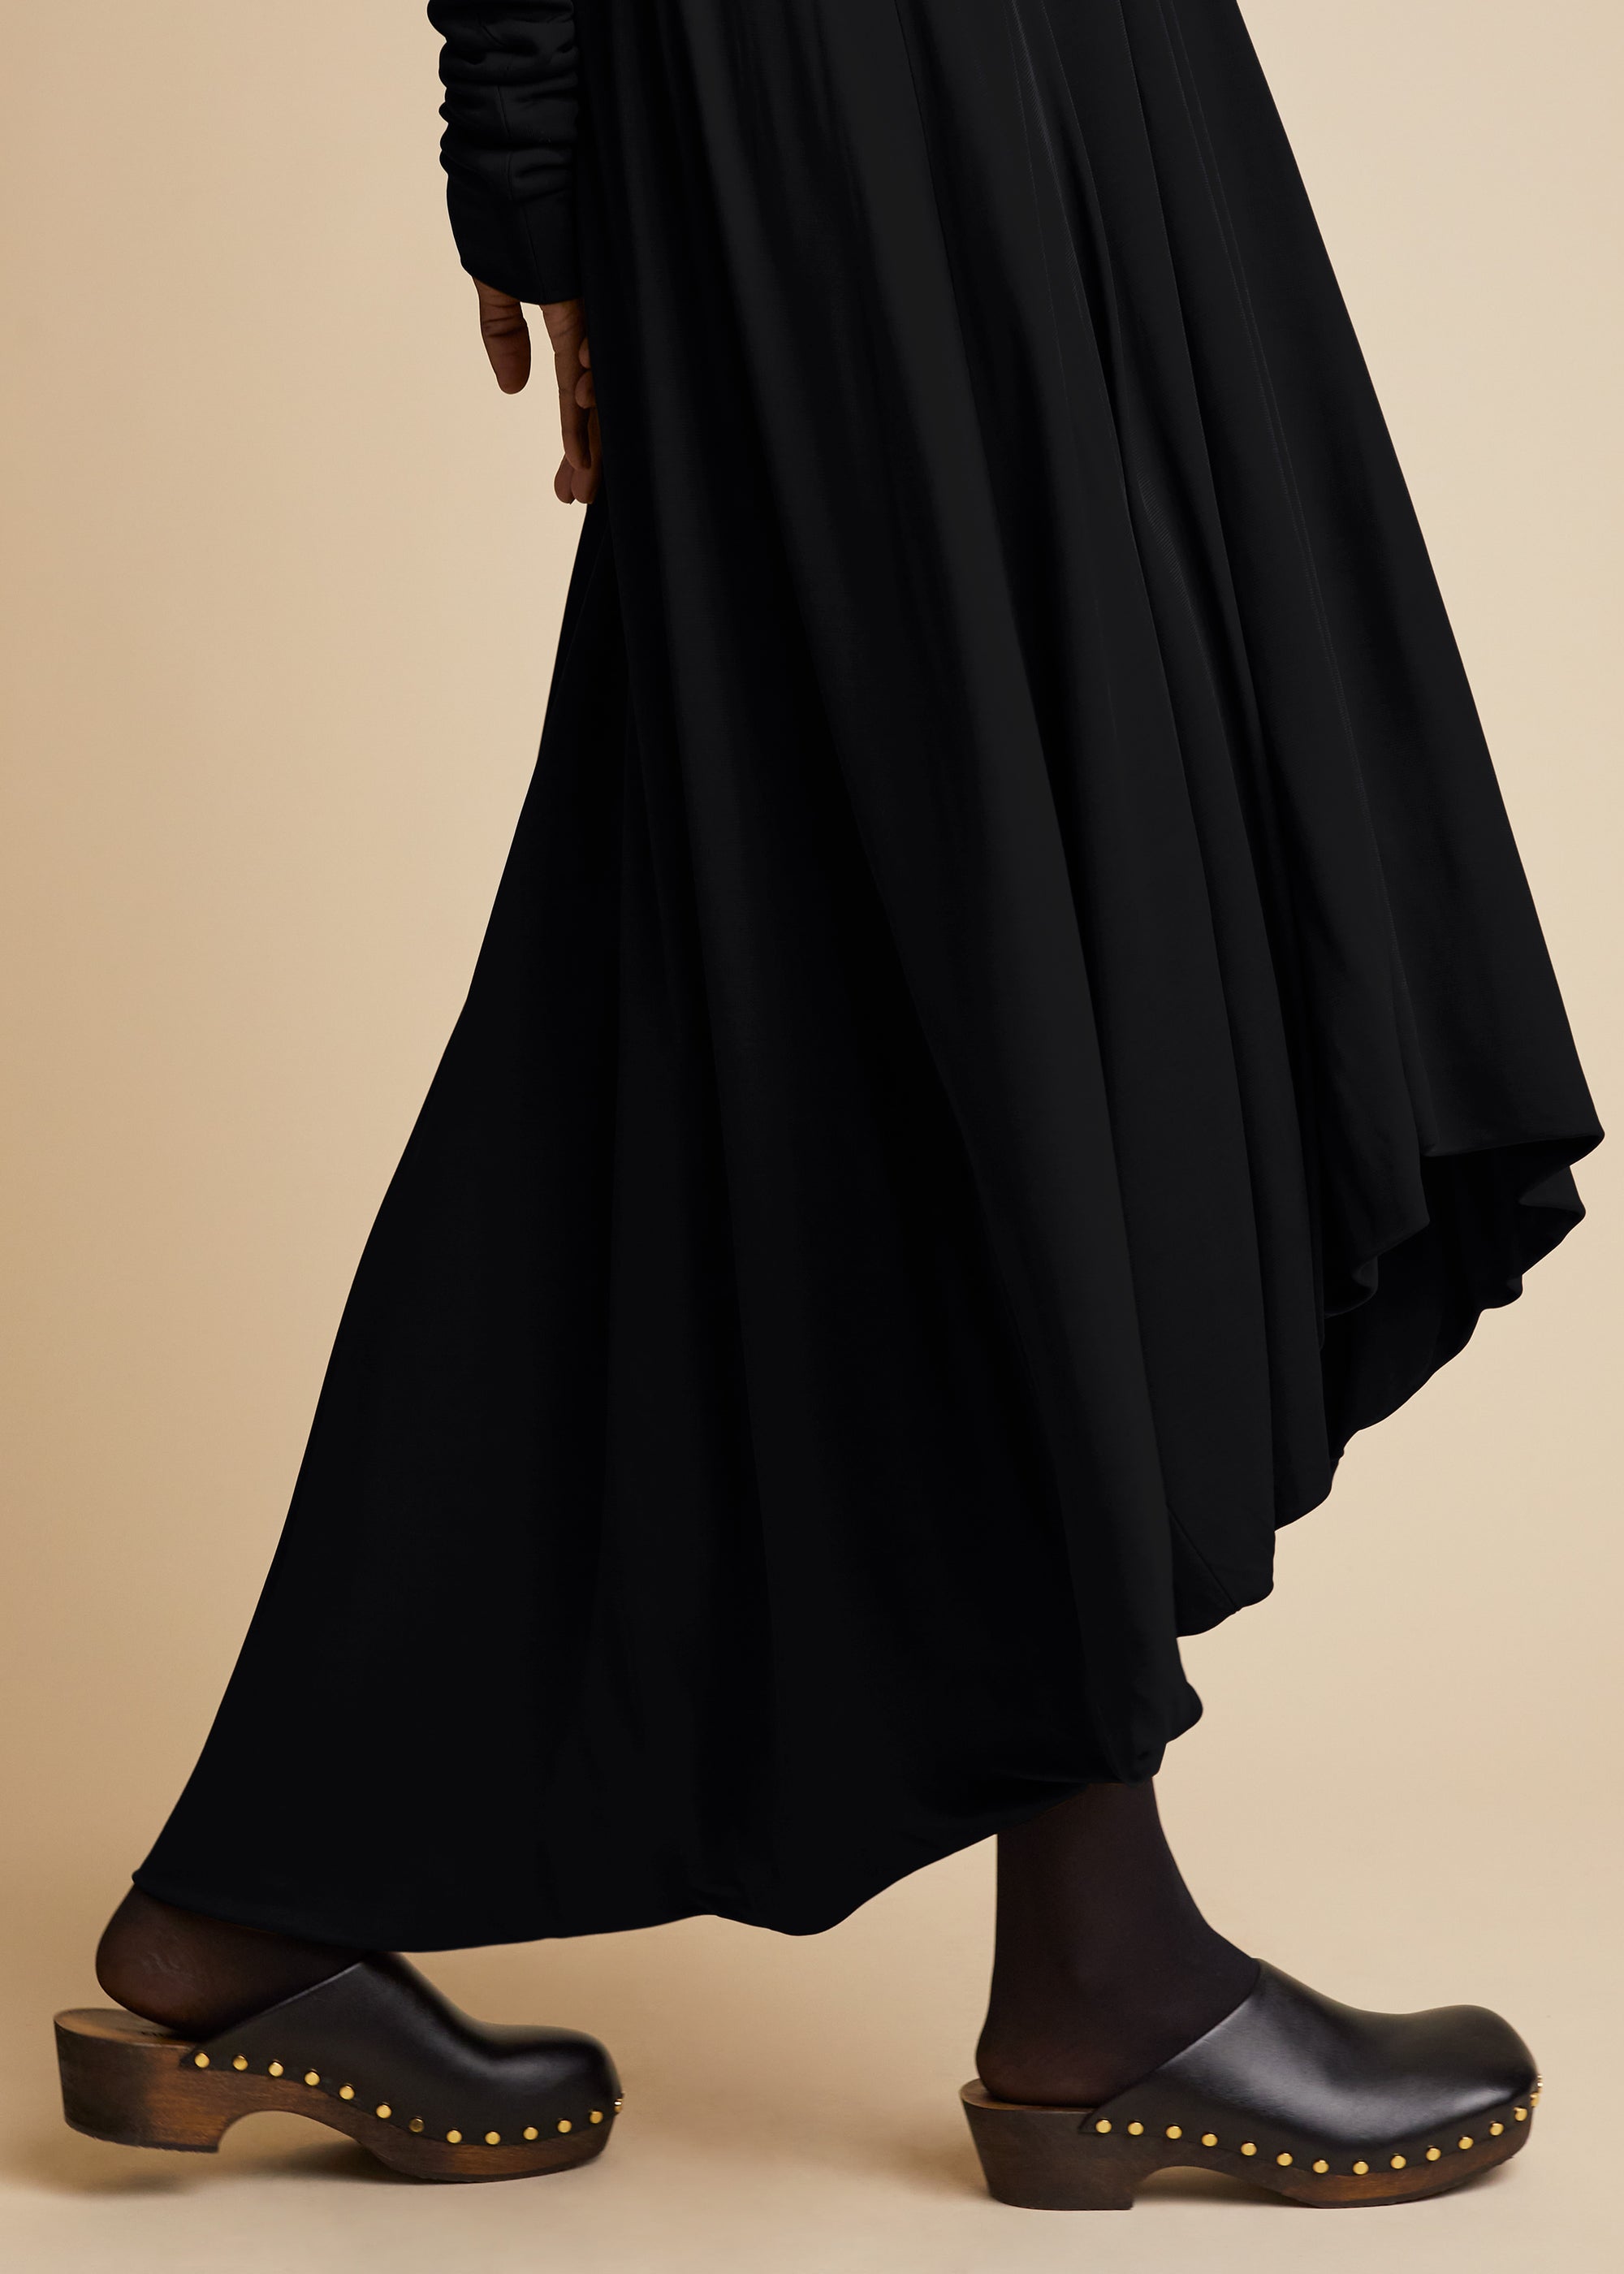 Nerissa dress - Black